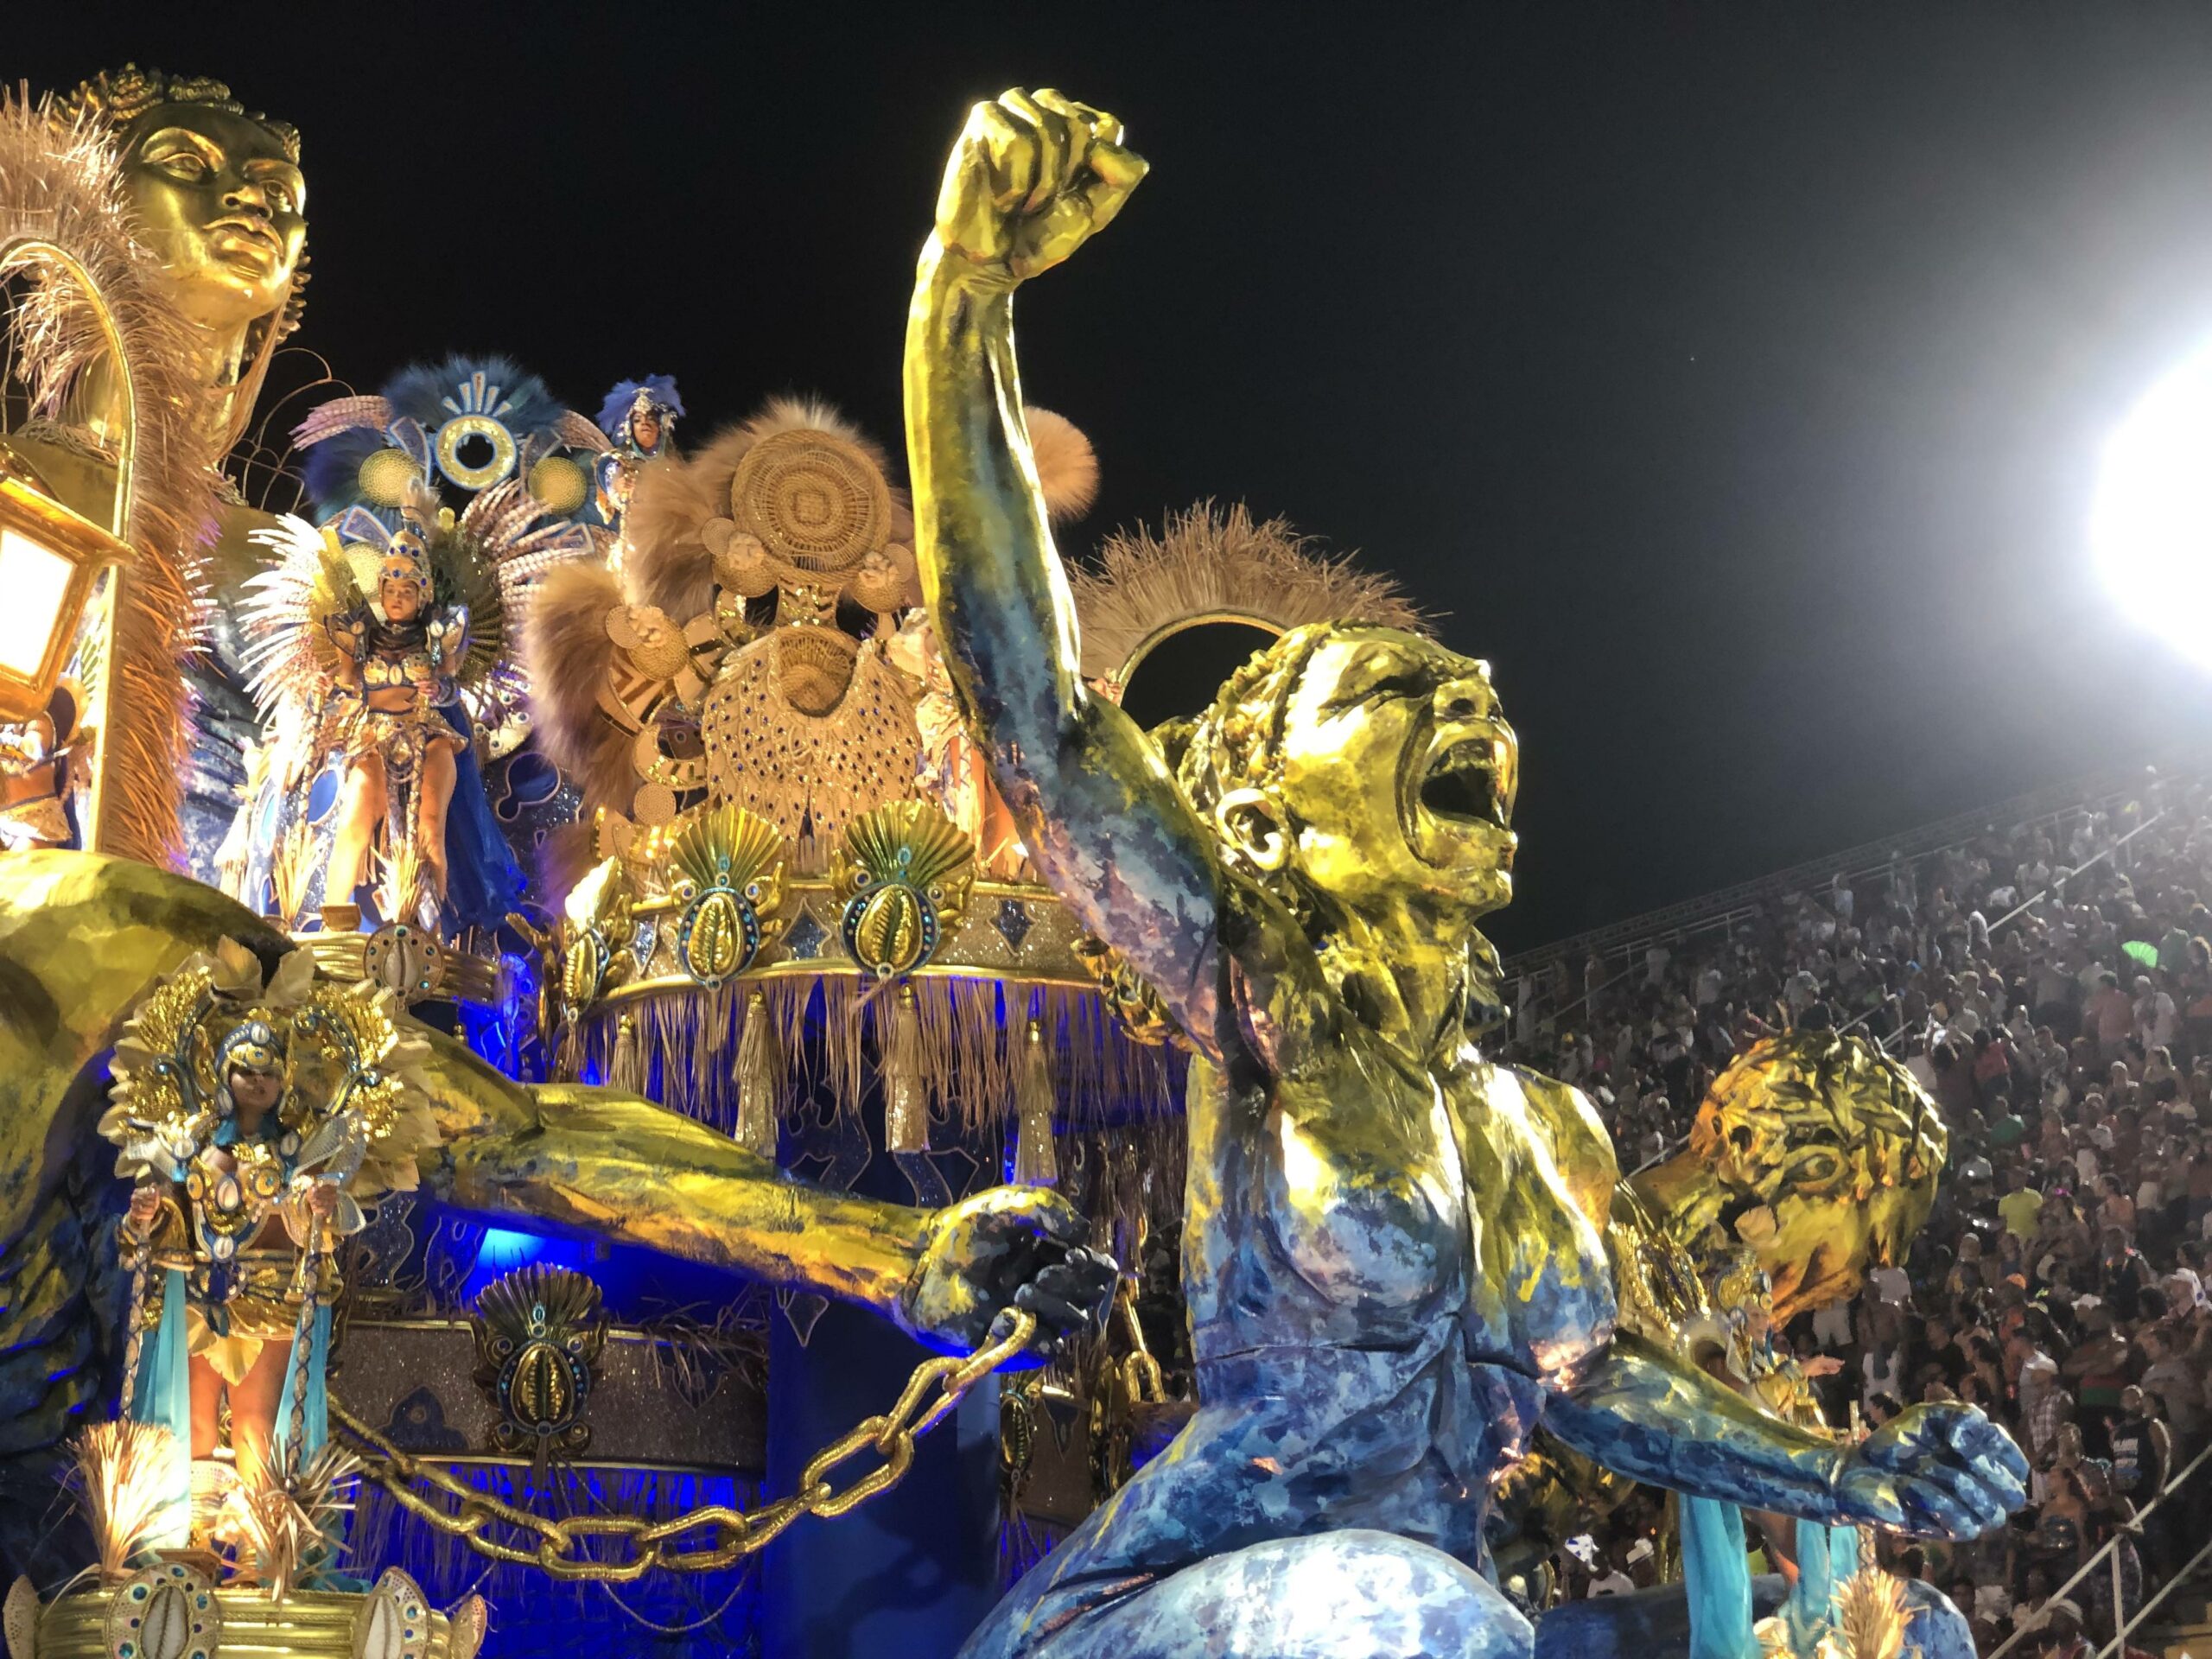 https://brazilian.report/wp-content/uploads/2023/02/carnival-rio-constance-1-scaled.jpg